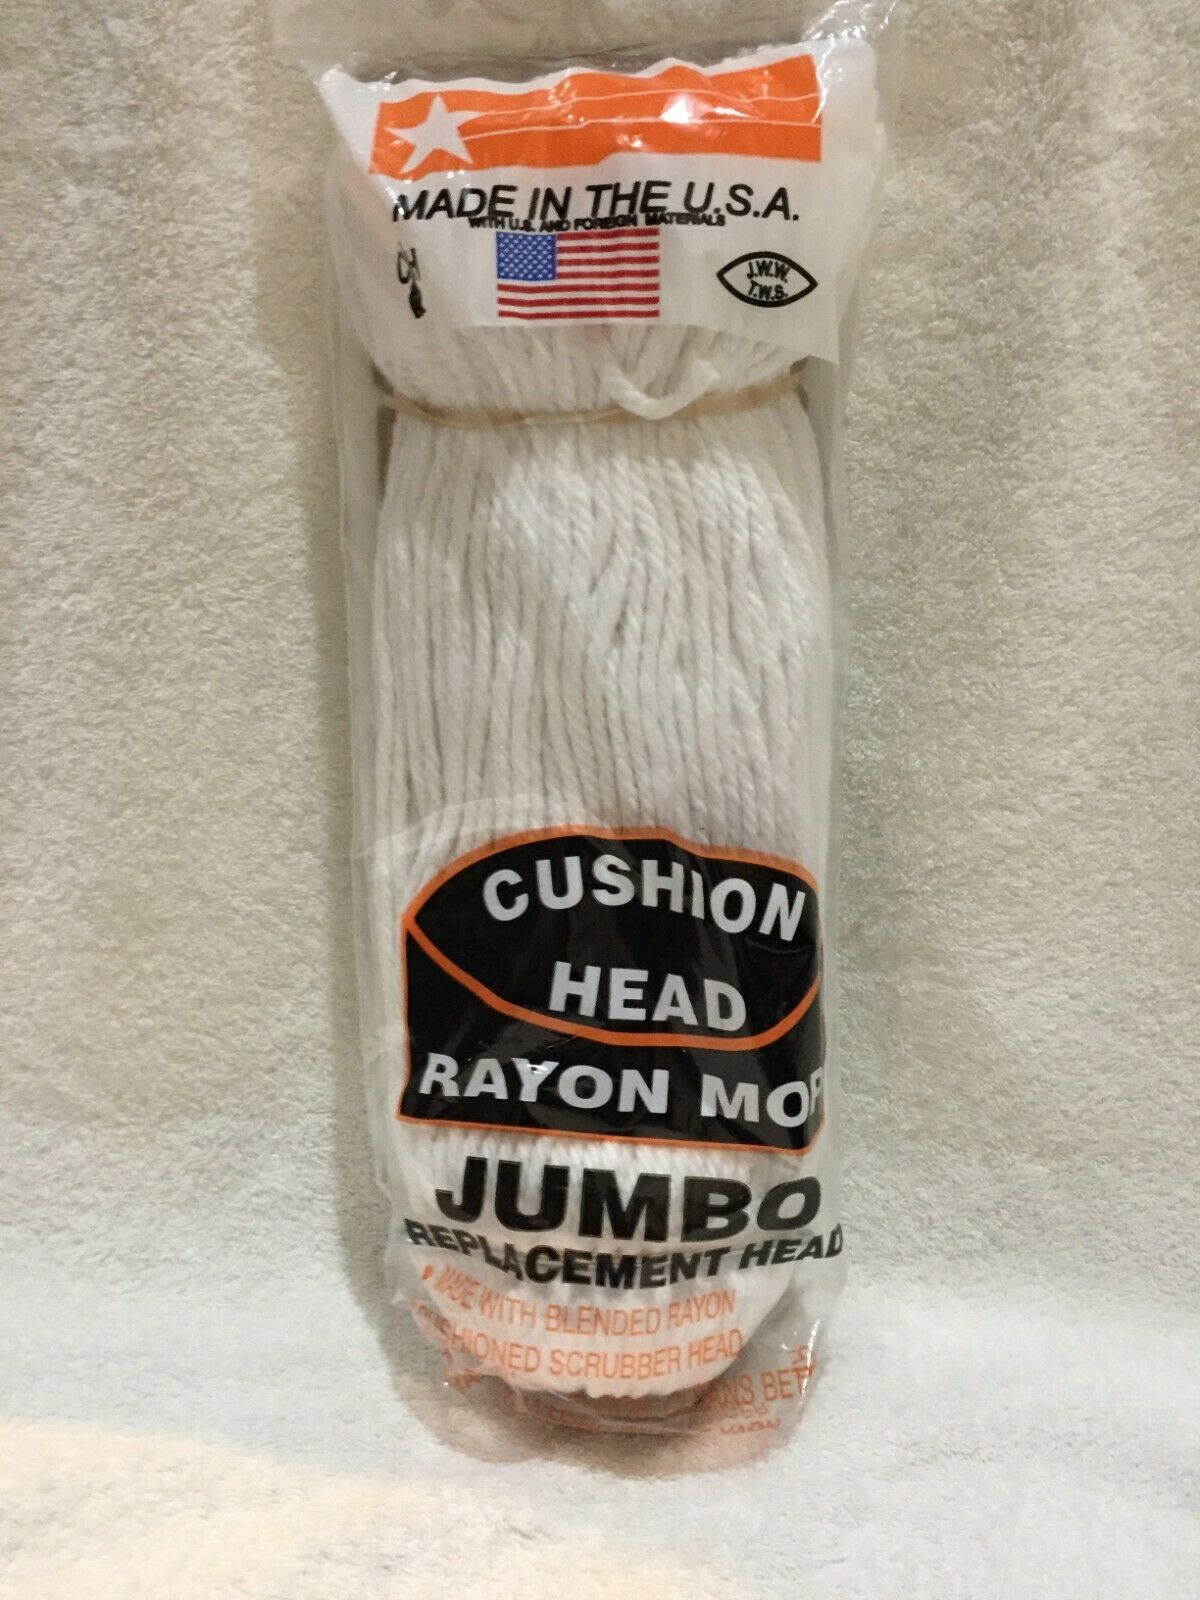 Jumbo Rayon Cushion Head Mop Replacement Poly Screw On Threaded Jw Mfg. Co.